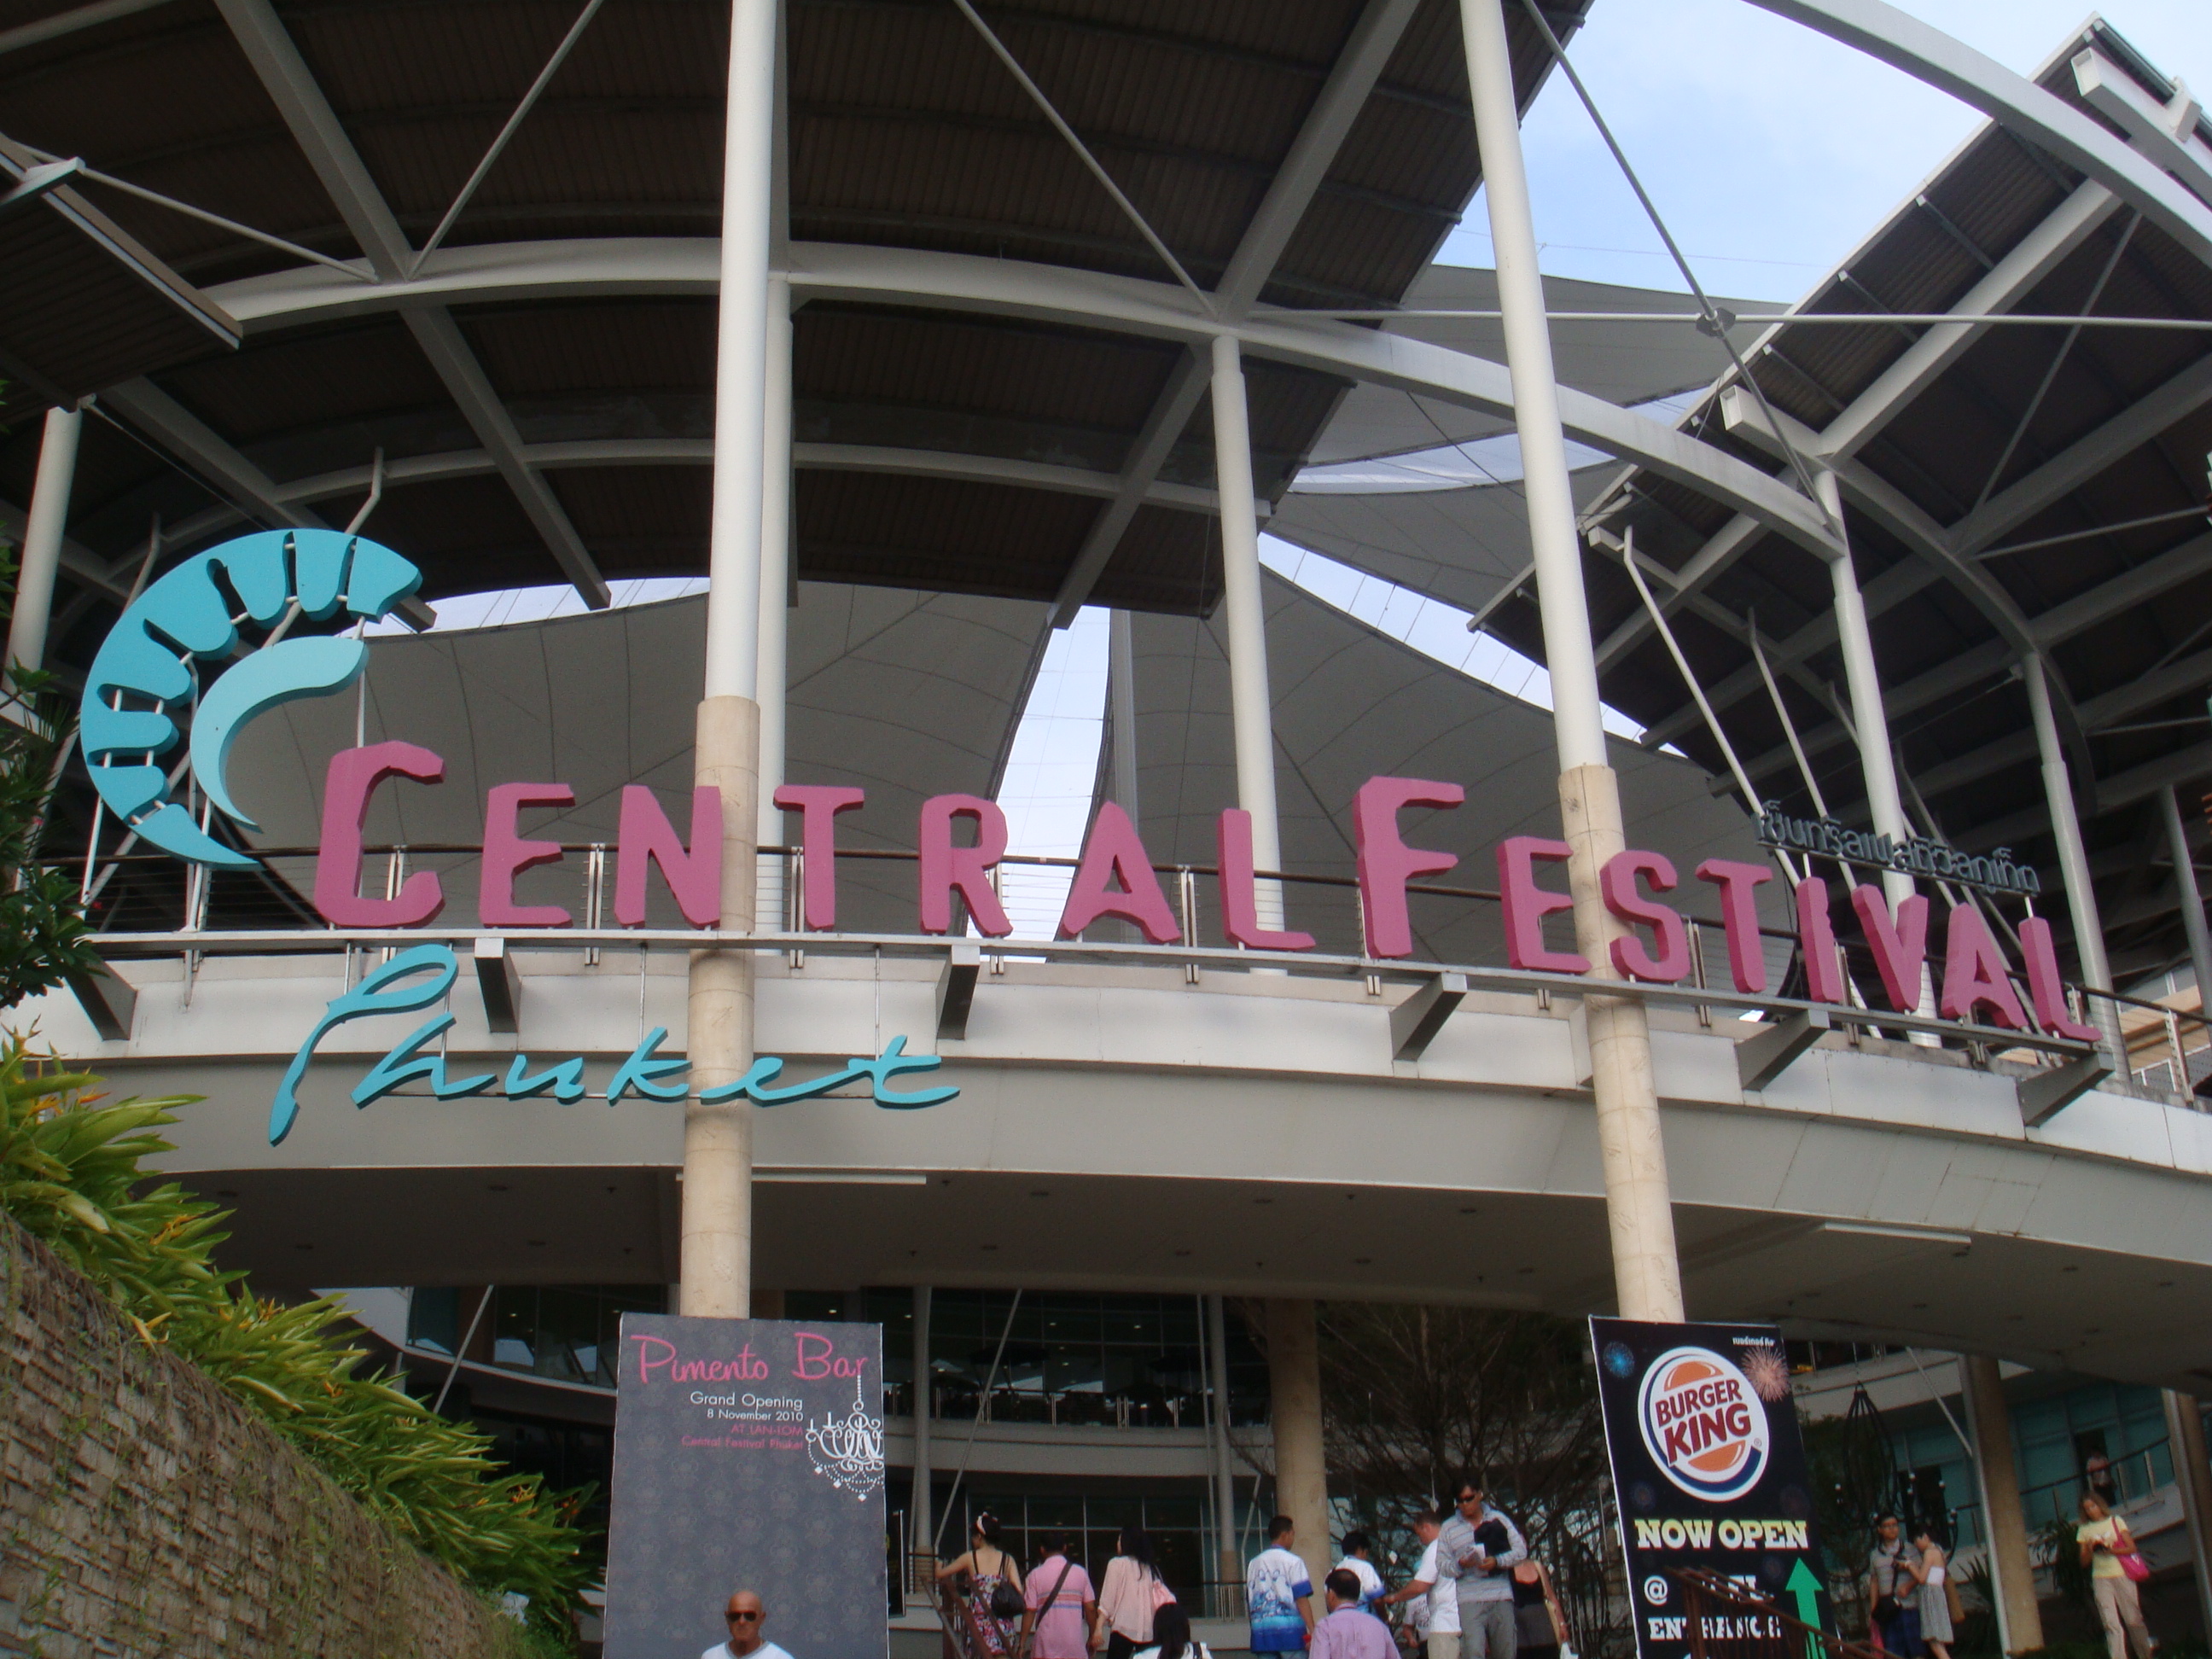 Central Festival Phuket- Shopping Mall in Phuket – Royal Vacation